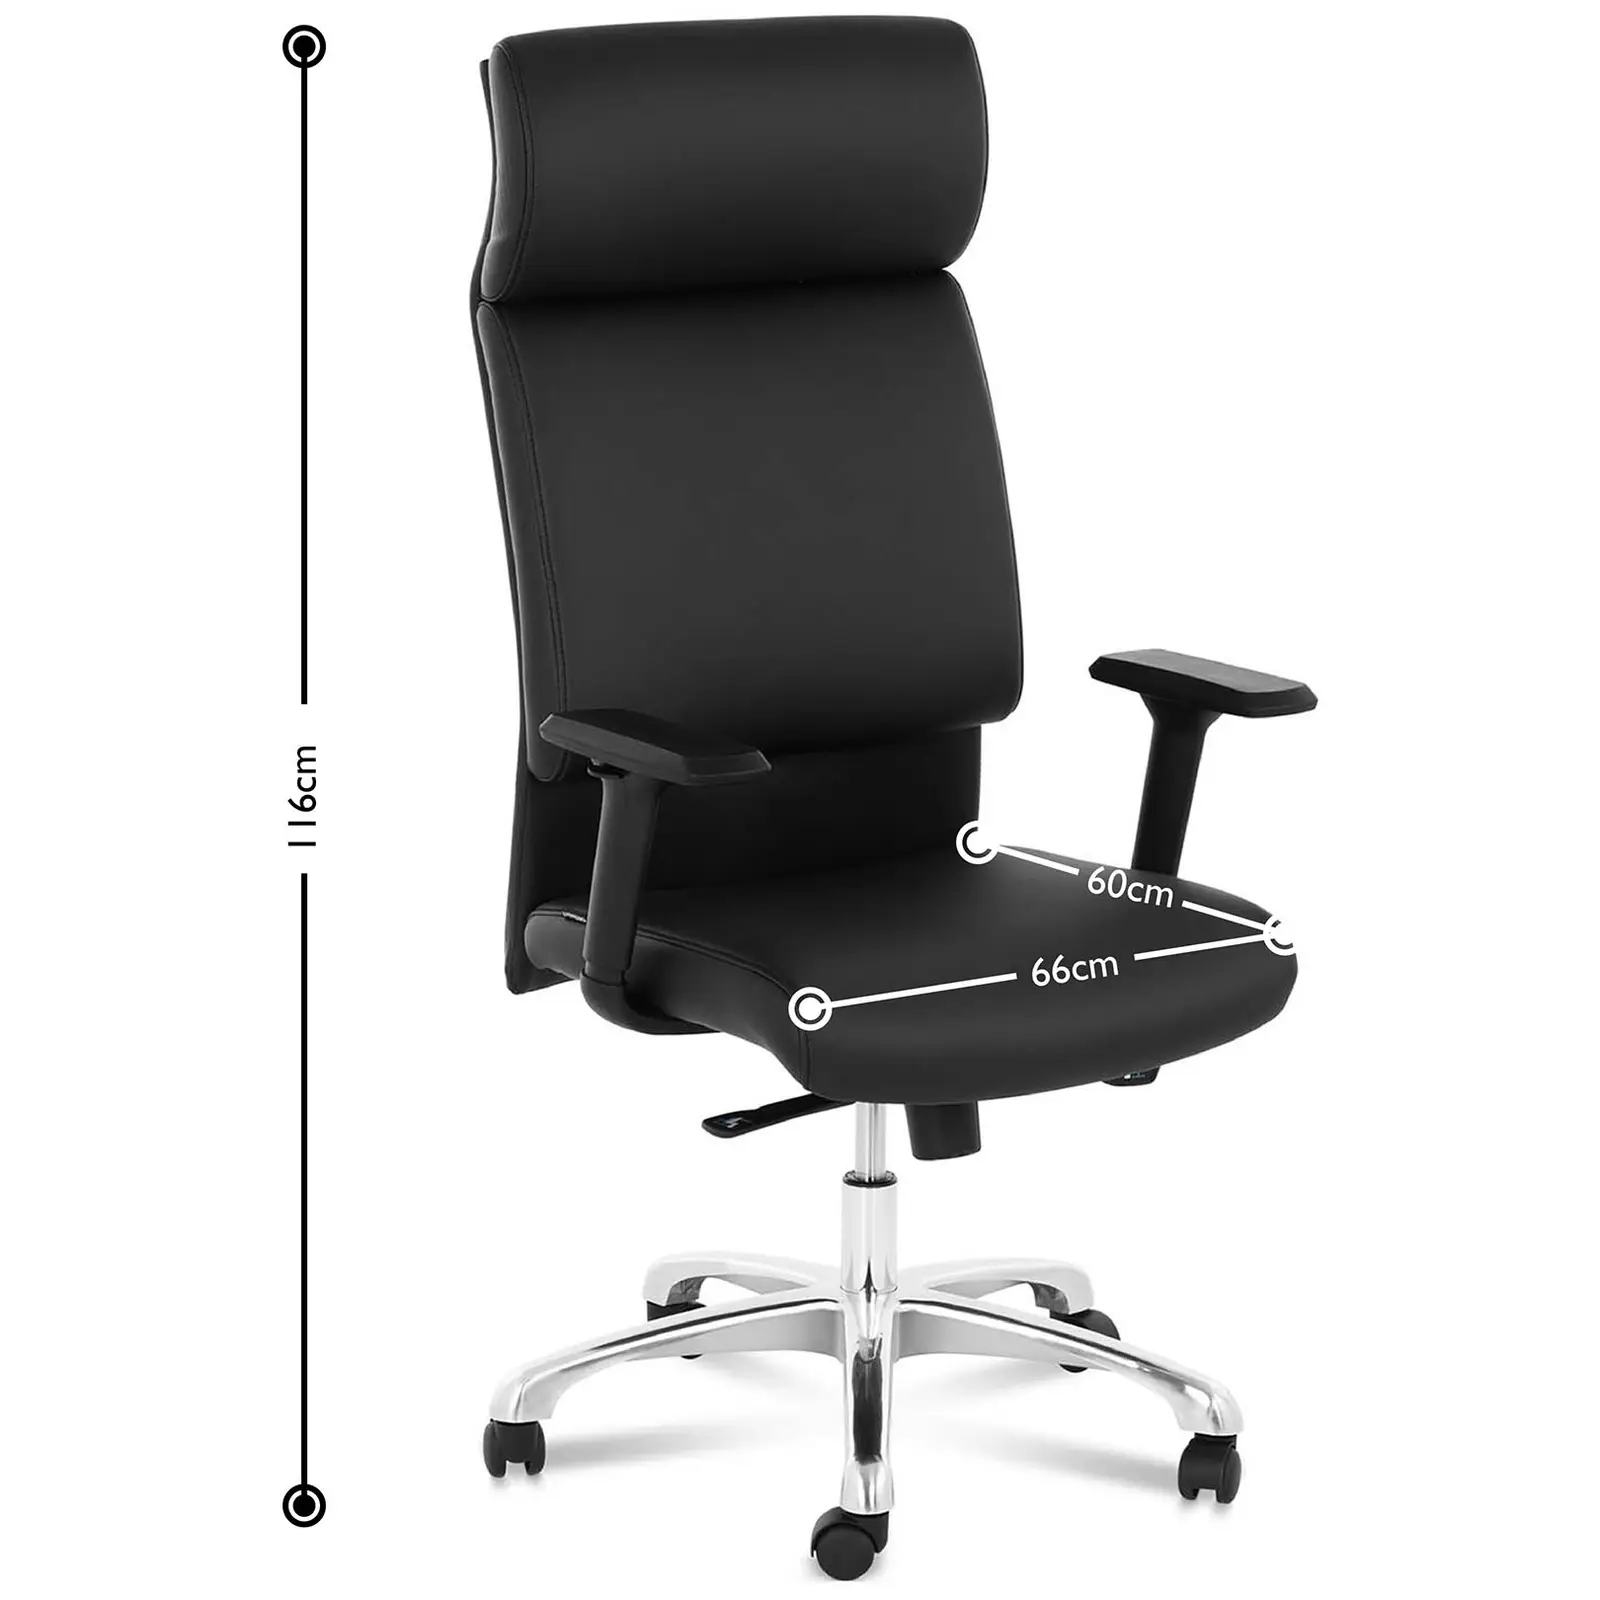 Silla de escritorio - sillón de dirección - cuero sintético - cromo - reposacabezas - 150 kg